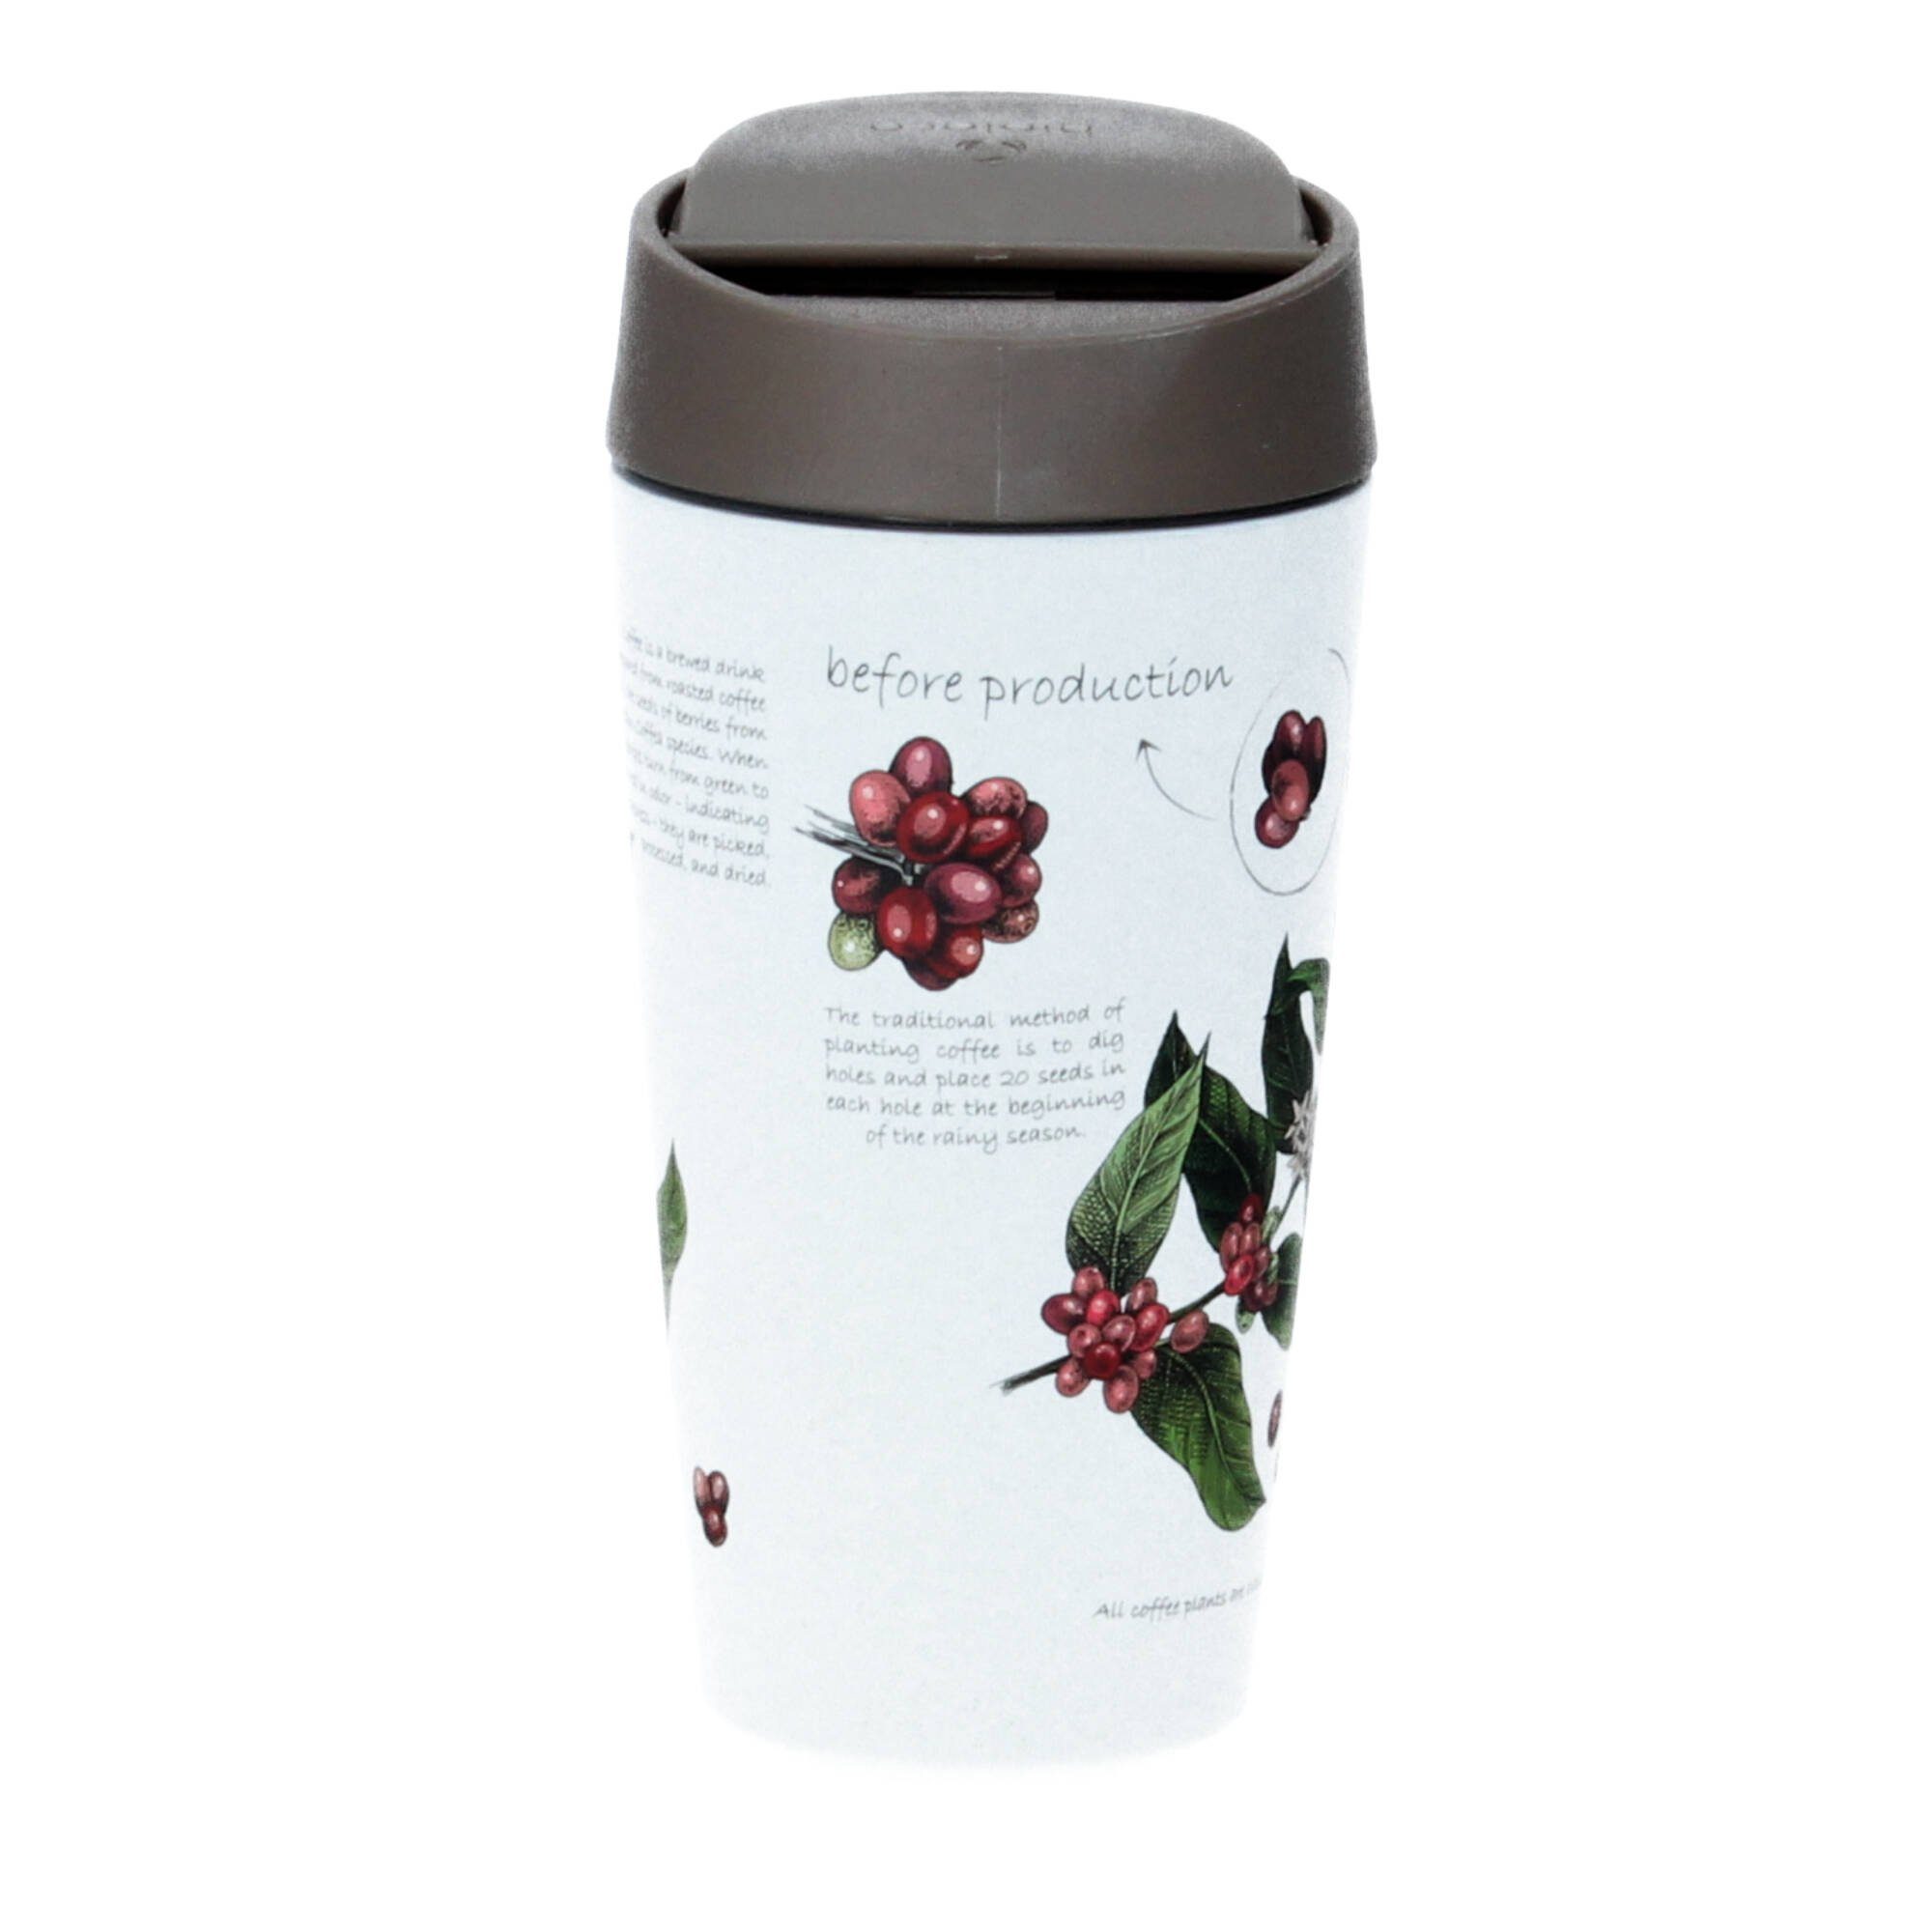 aus mic ml bioloco Pflanzenzucker) plant deluxe GmbH coffee, PLA Coffee-to-go-Becher (Kunststoff 420 chic cup